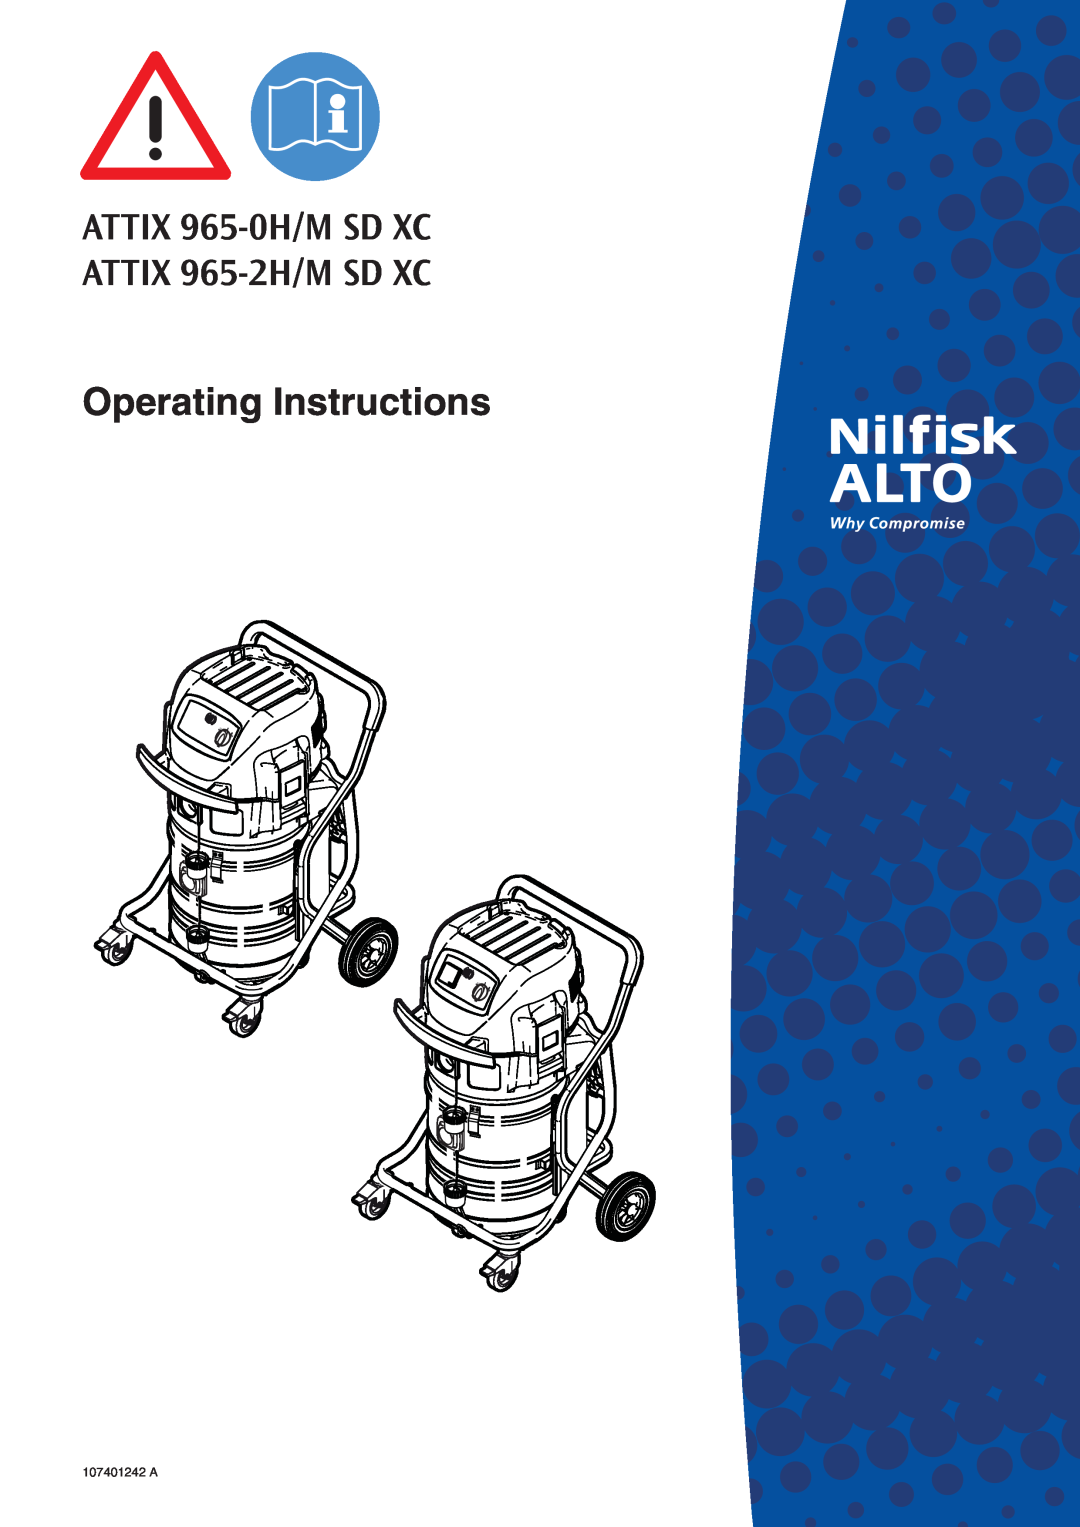 Nilfisk-ALTO ATTIX 965-0H/M SD XC manual Operating Instructions, ATTIX 965-0H/MSD XC ATTIX 965-2H/MSD XC, 107401242 A 